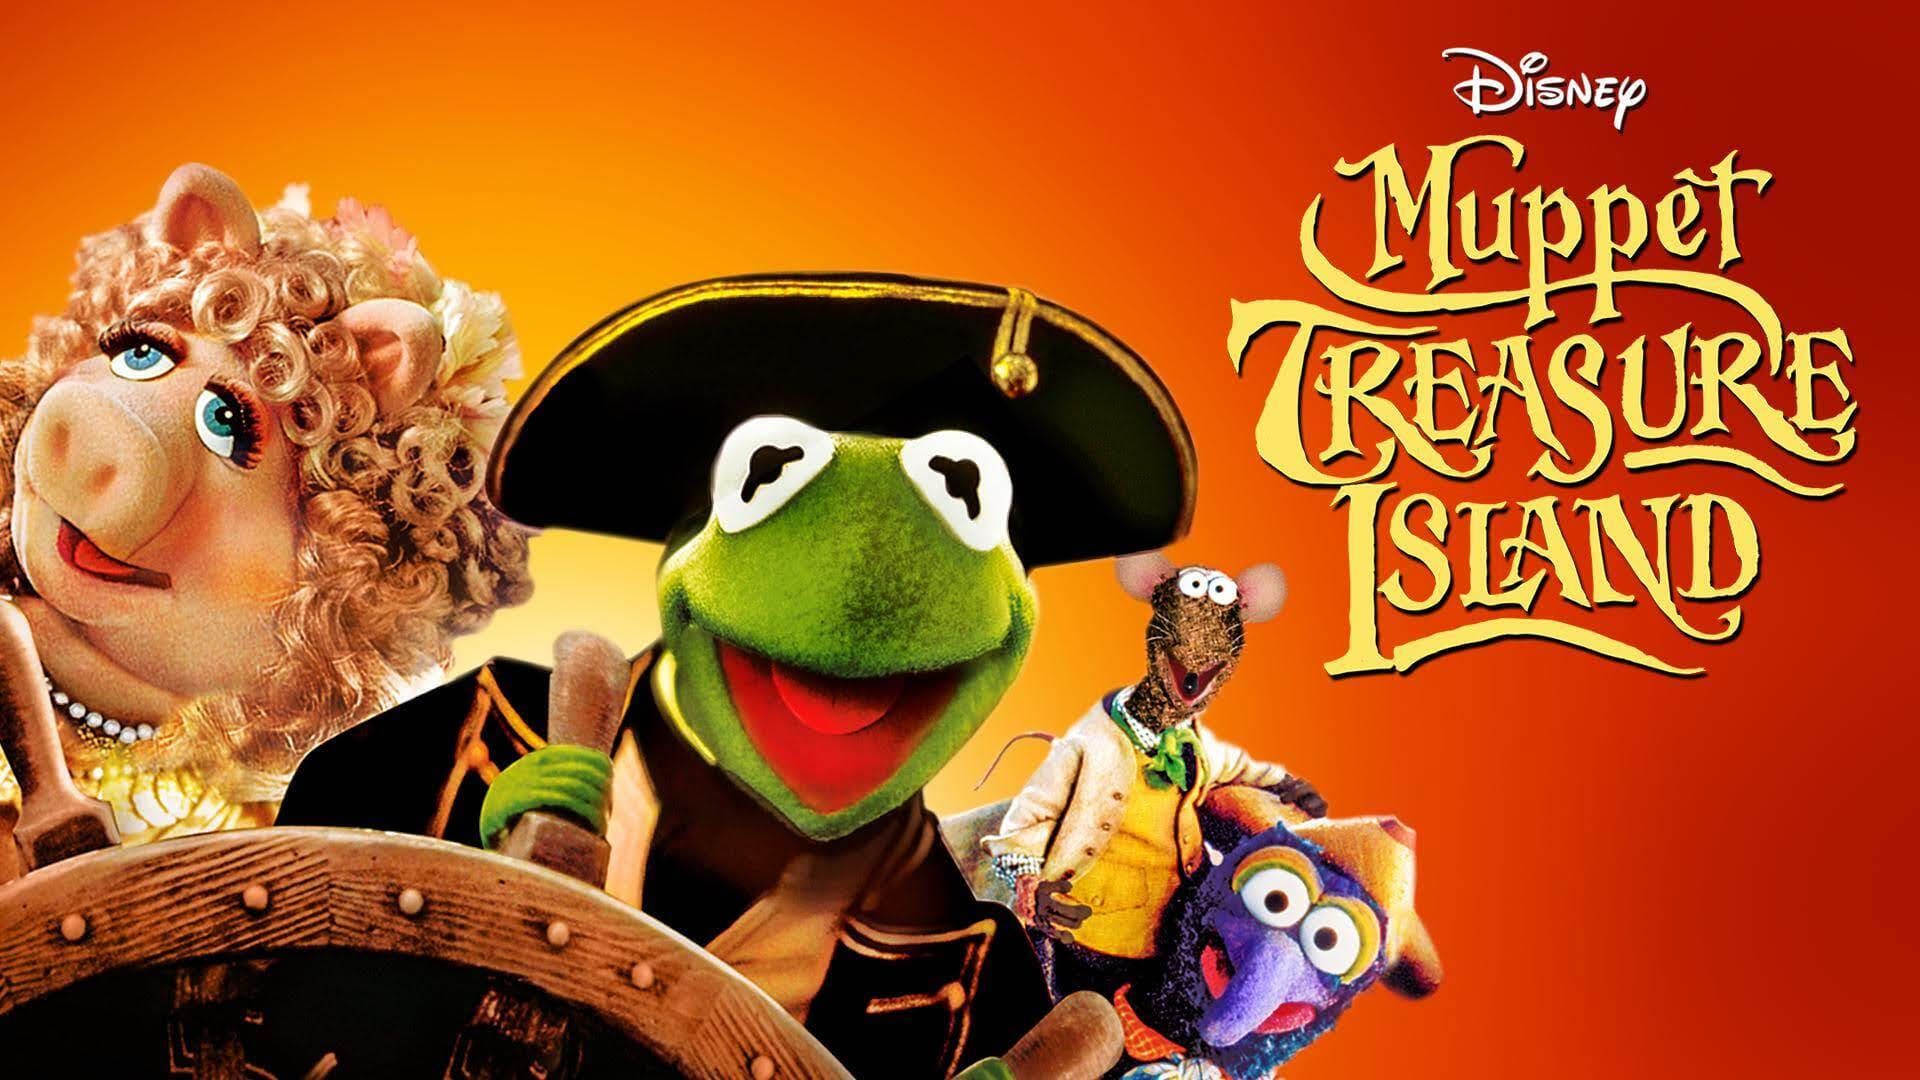 Muppet Treasure Island Sing-Along background